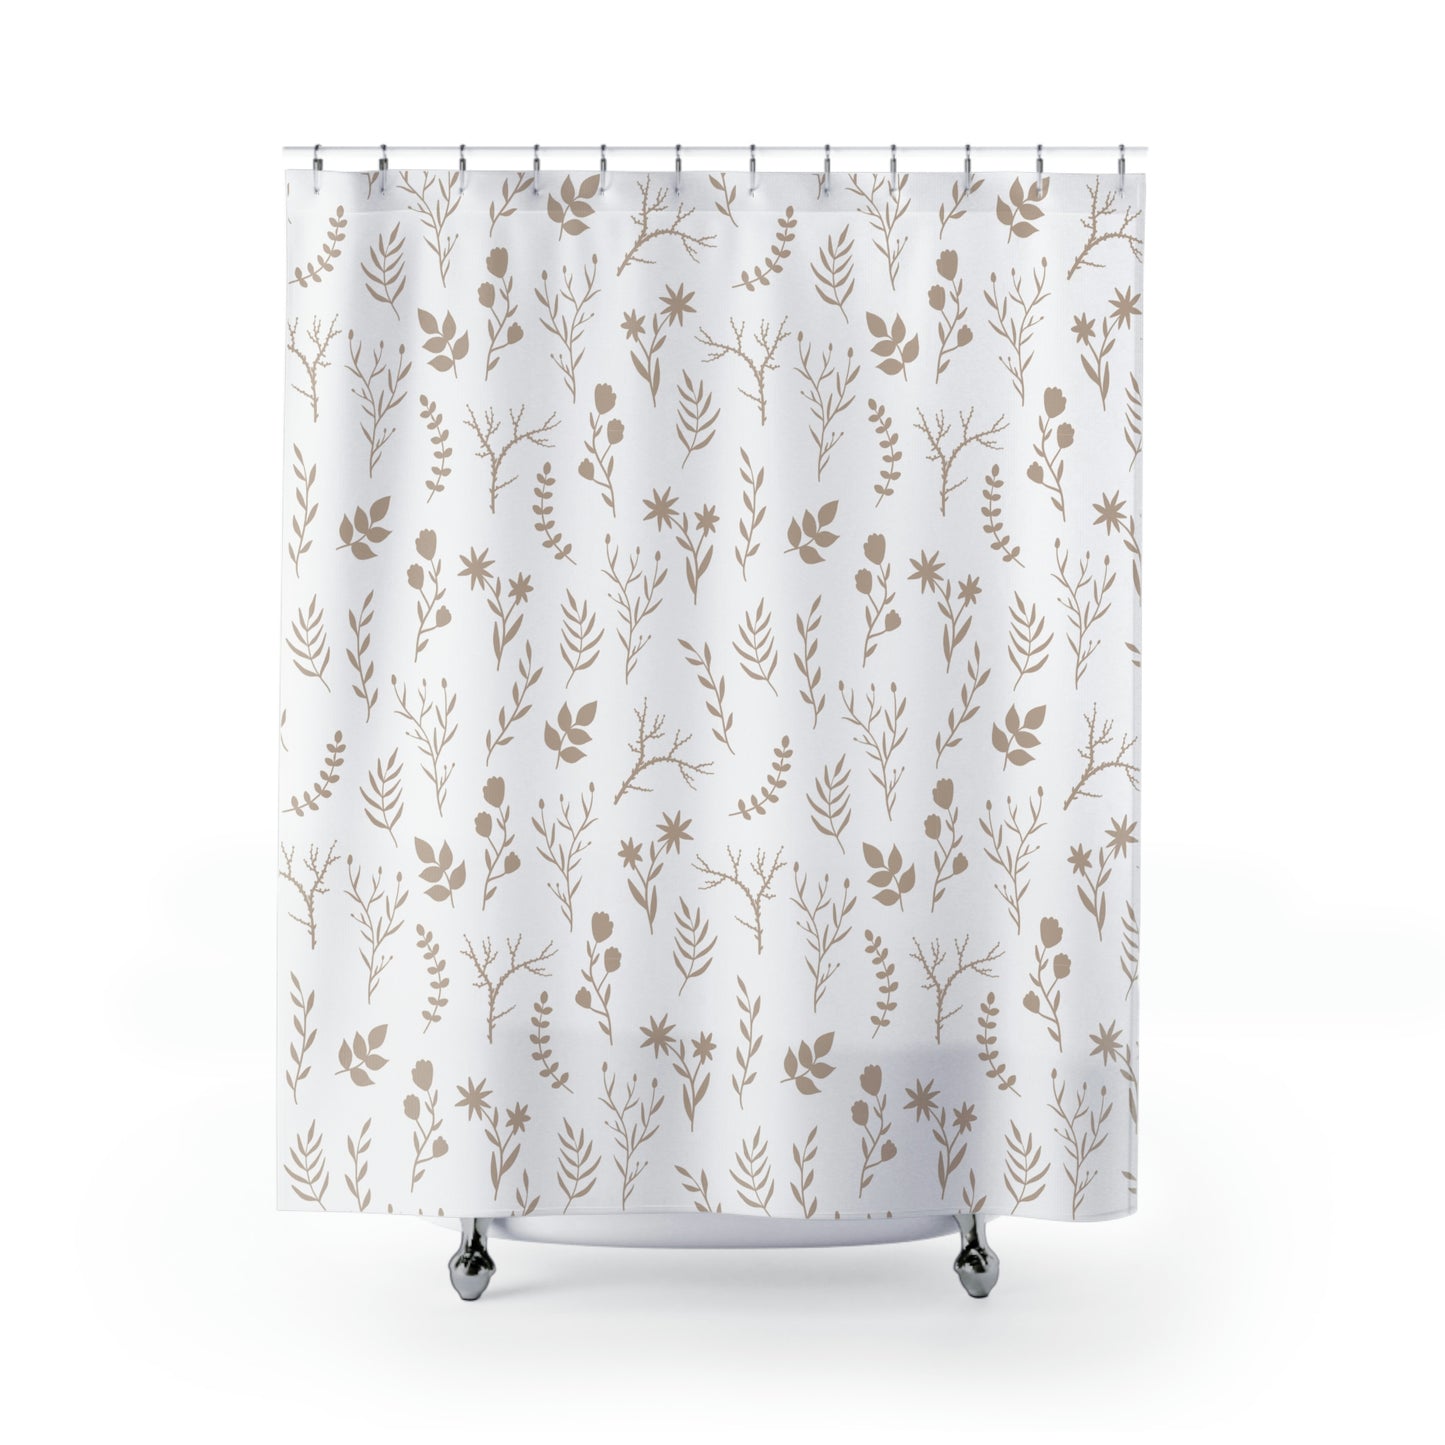 Cream and White Pretty Floral Print Shower Curtain | Modern Floral Bathroom Shower Curtain